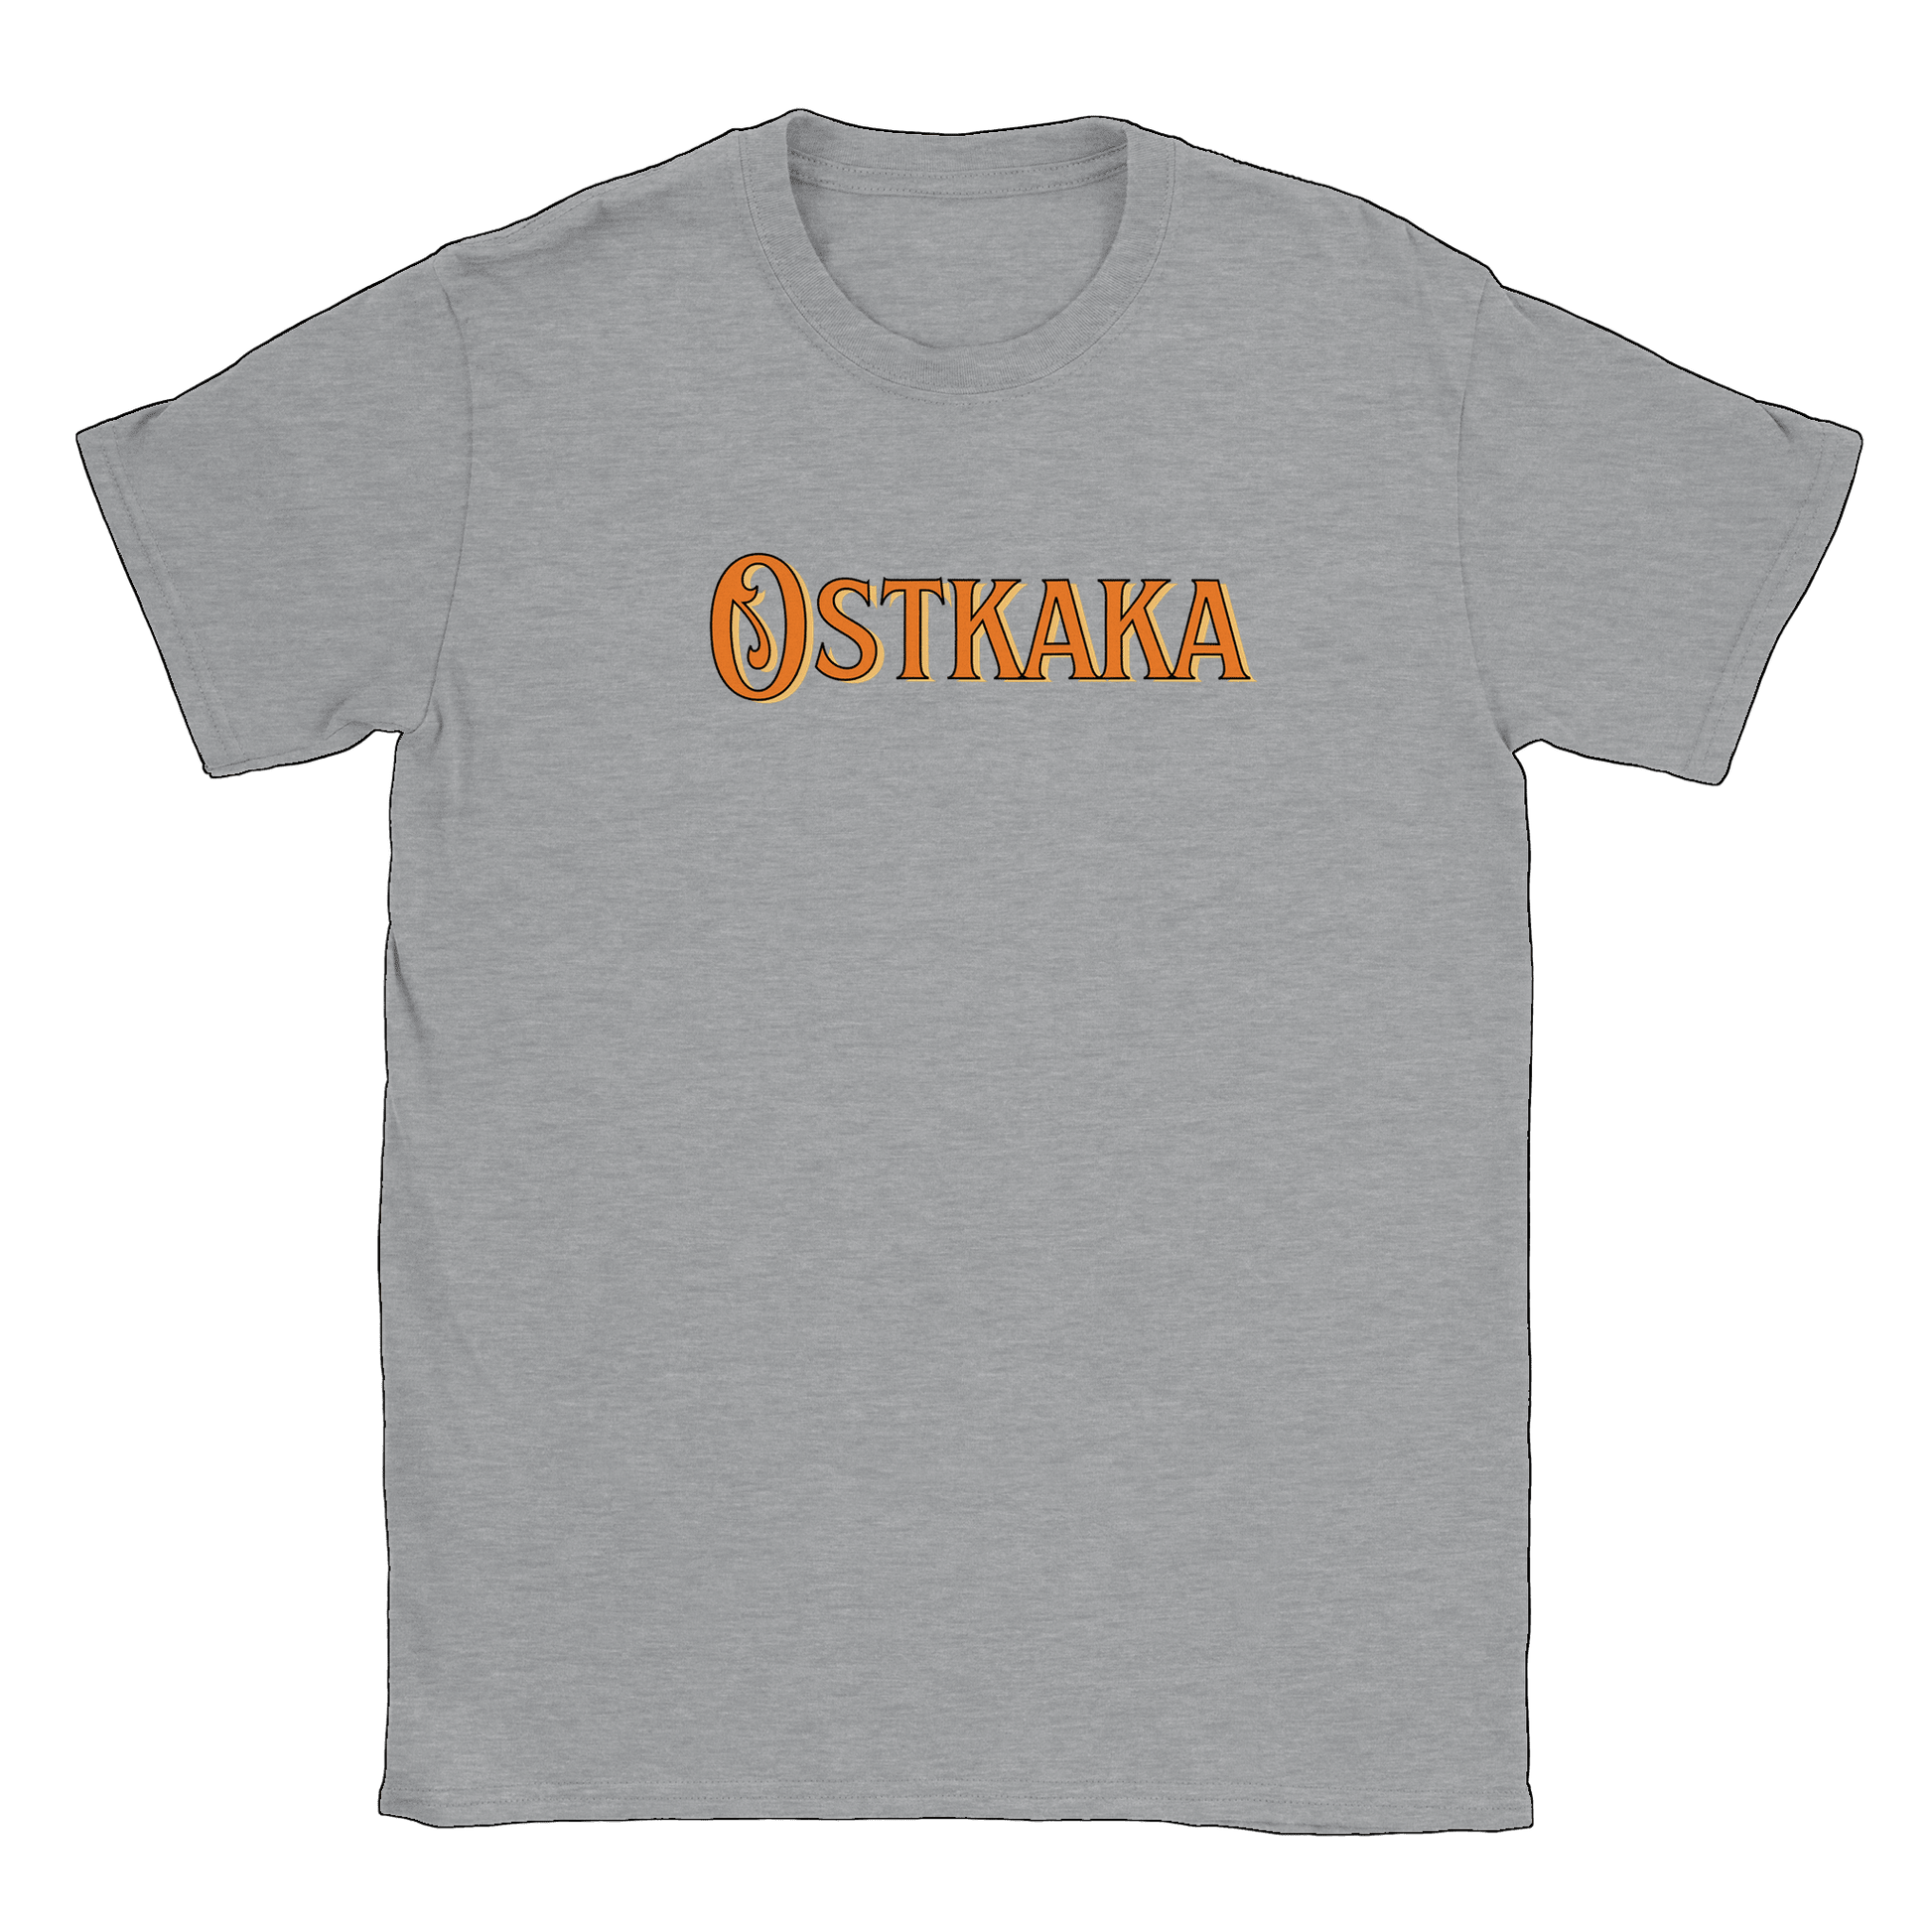 Ostkaka - T-shirt Sports Grey